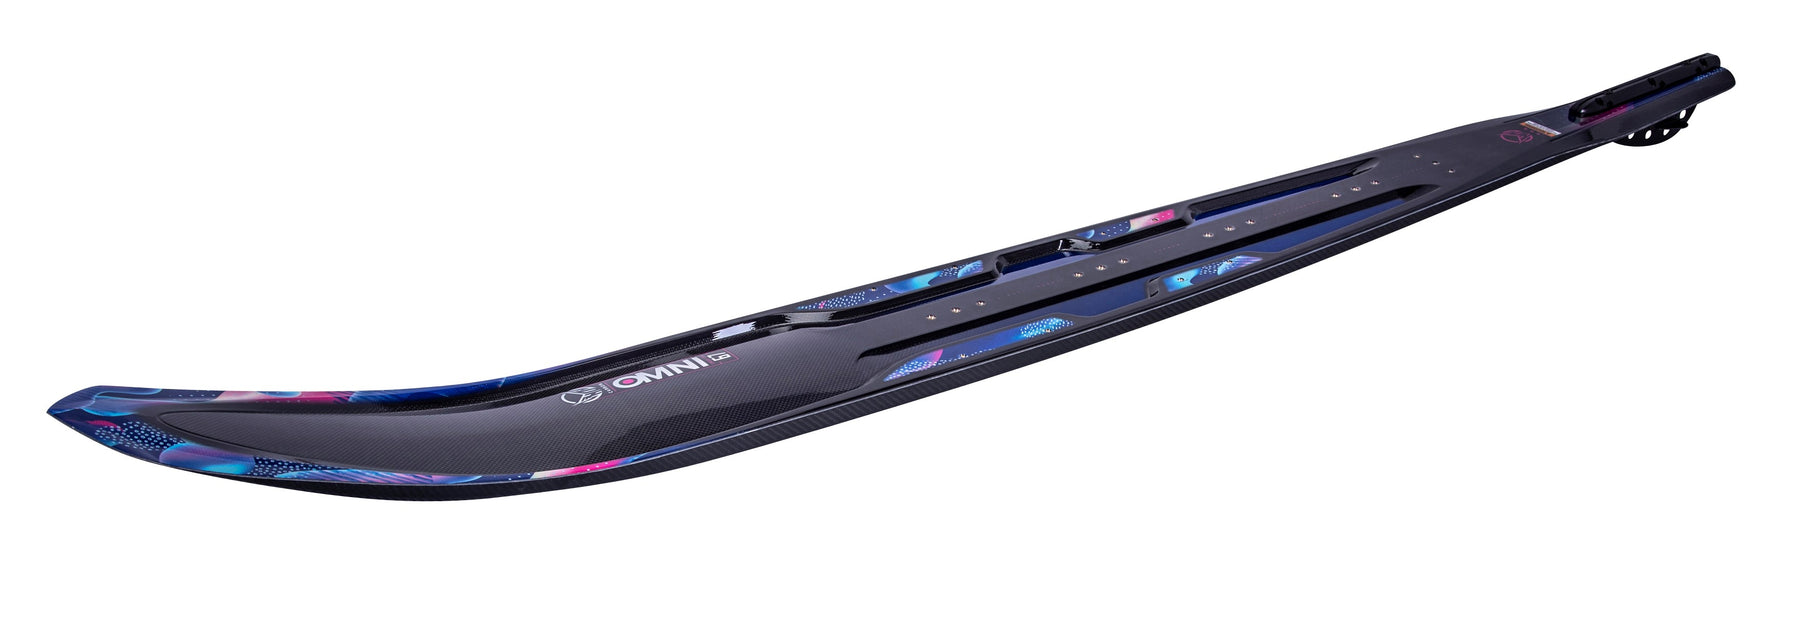 HO Women's Carbon Omni Water Ski 2021